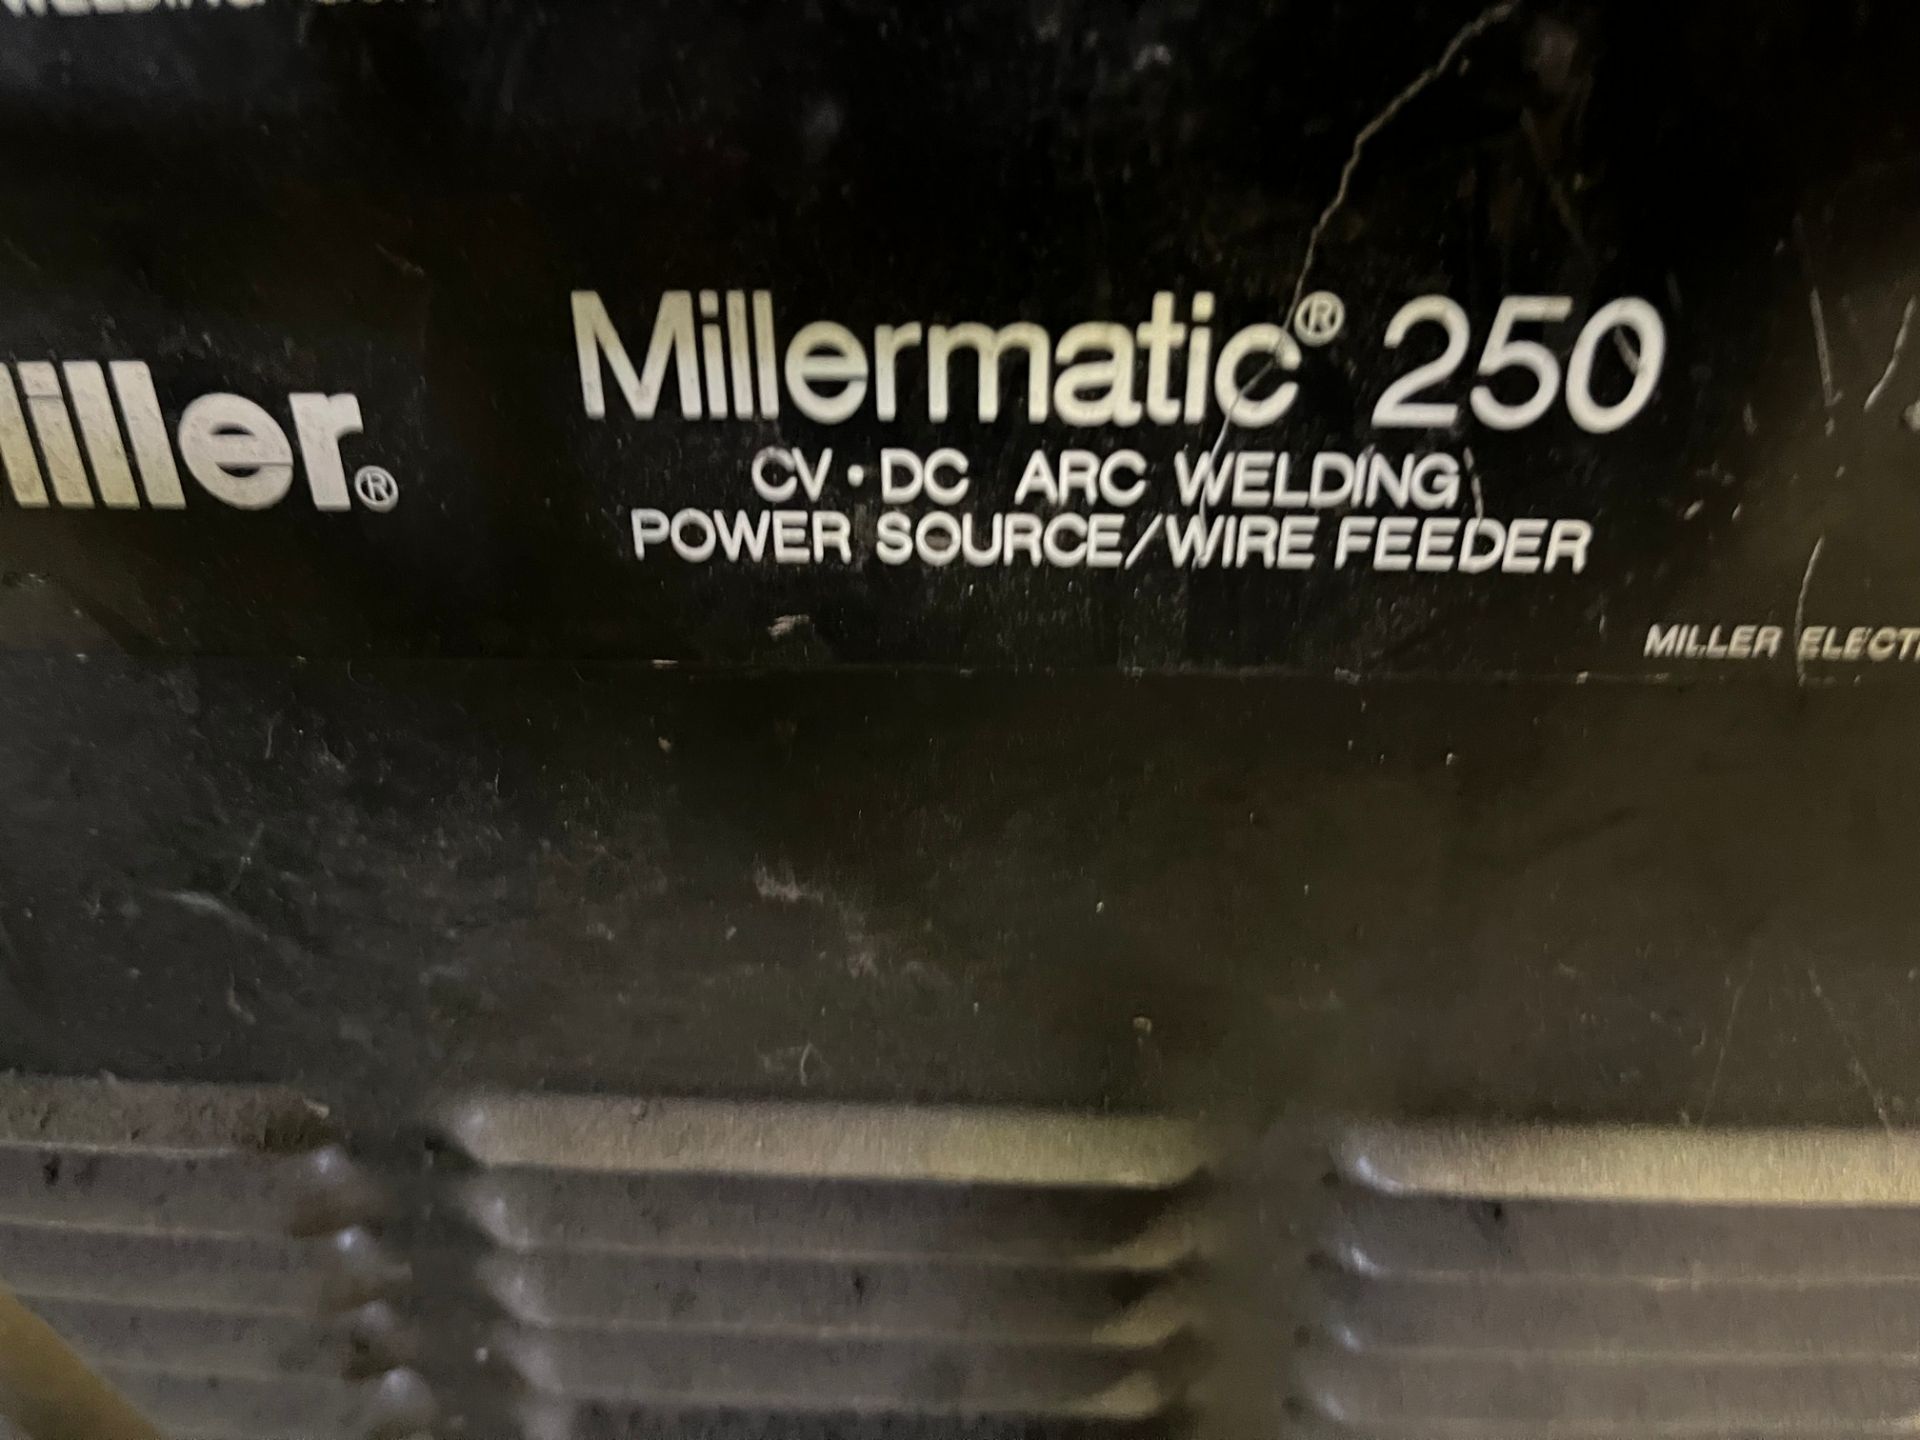 MILLER MILLERMATIC 250 CV DC ARC WELDING POWER SOURCE - Image 2 of 3